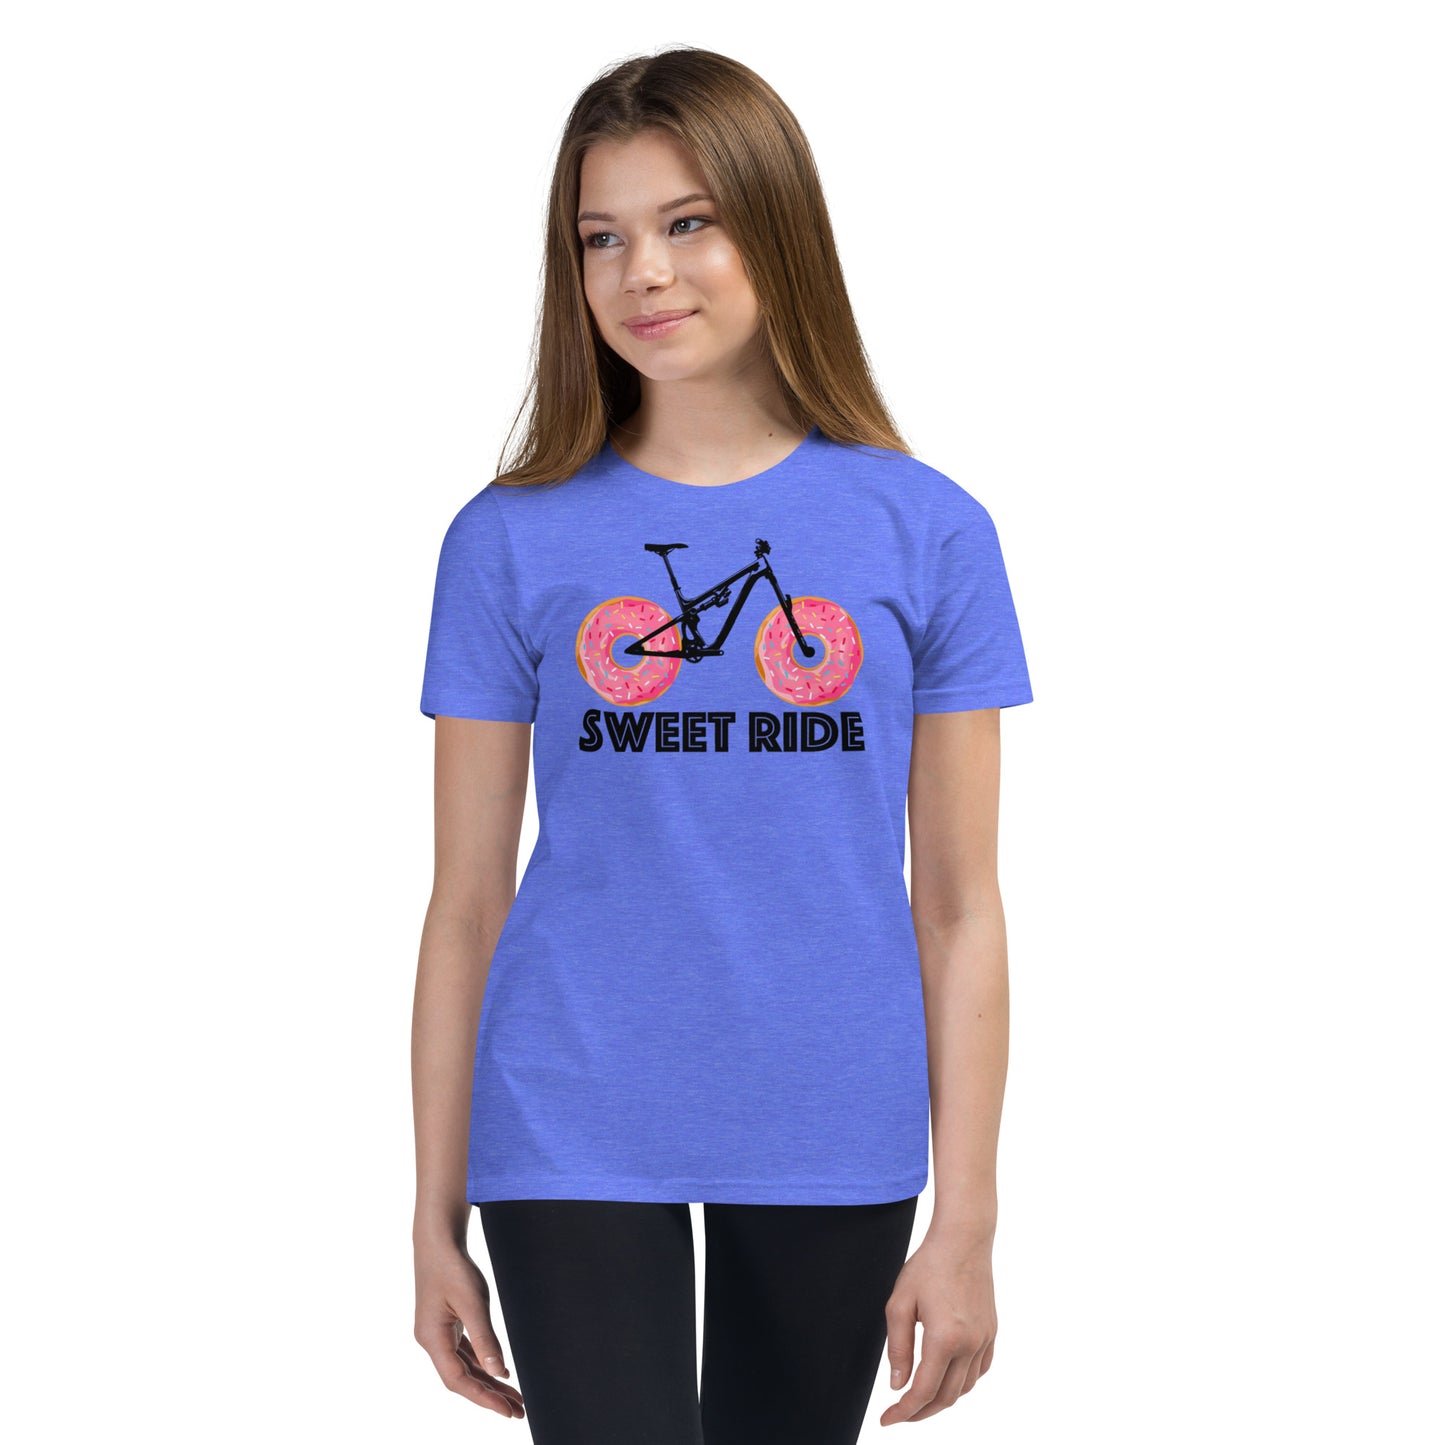 Sweet MTB Ride - Youth Short Sleeve T-Shirt